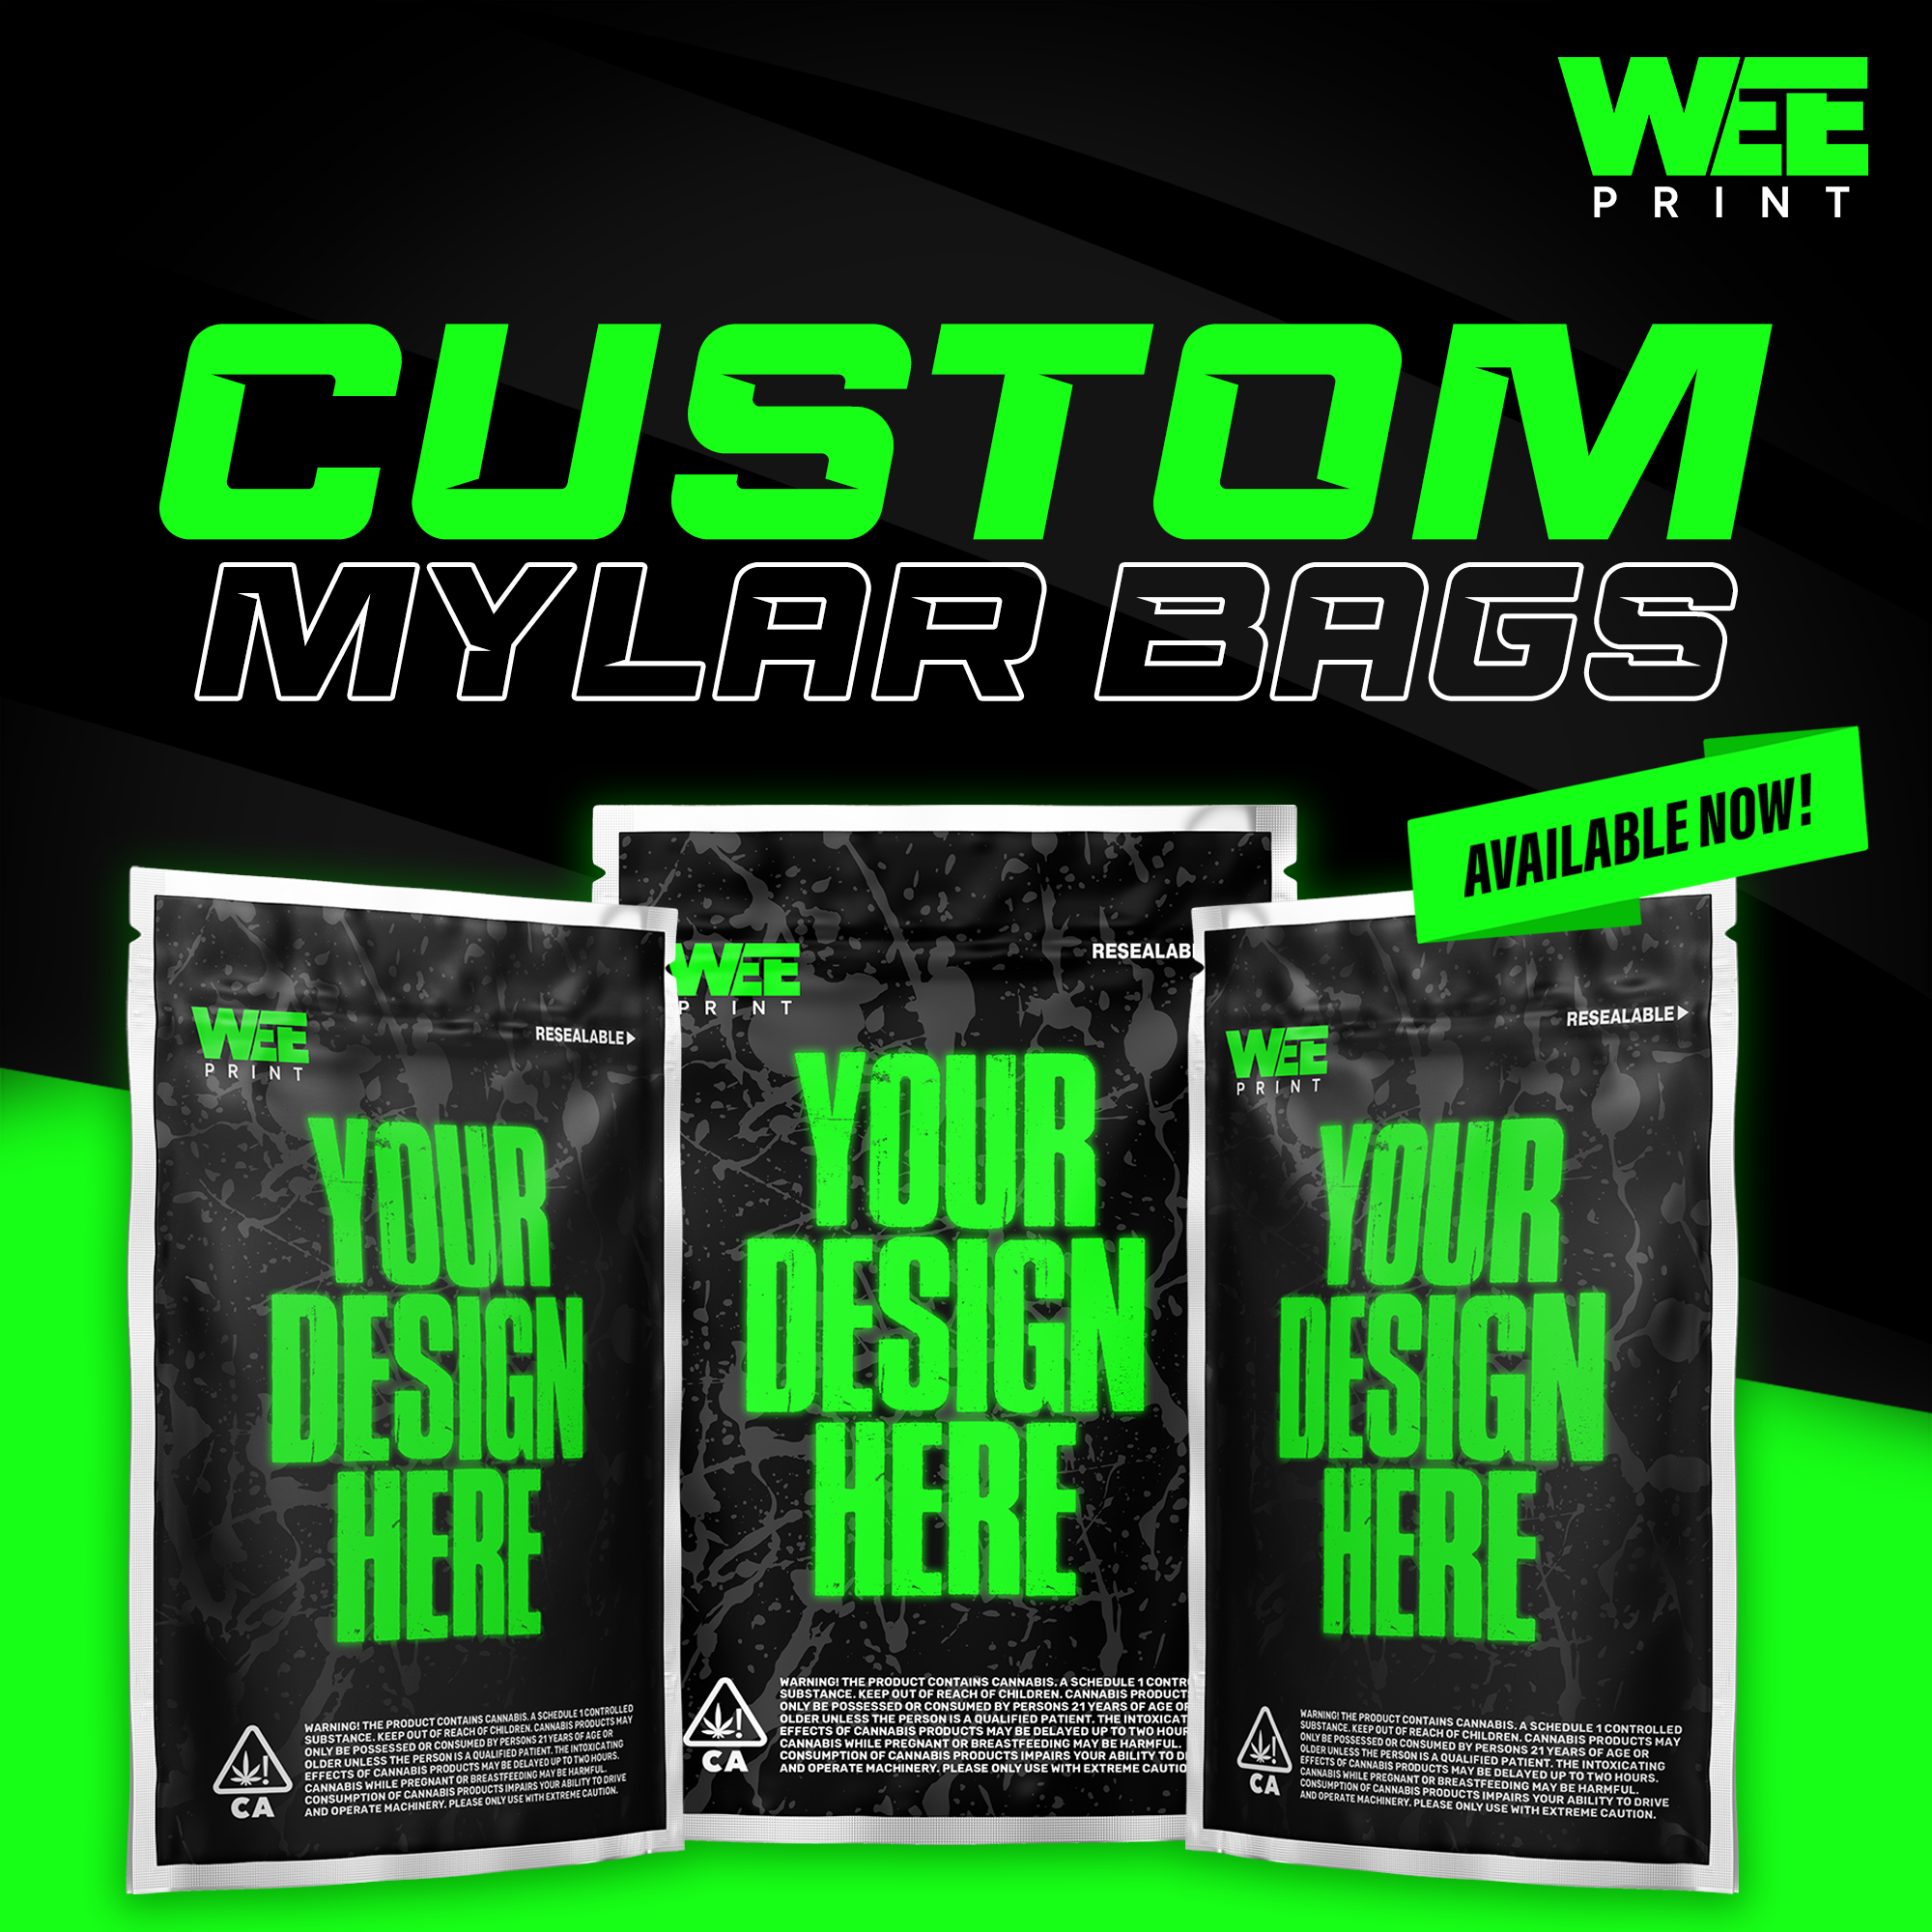 custom mylar bags